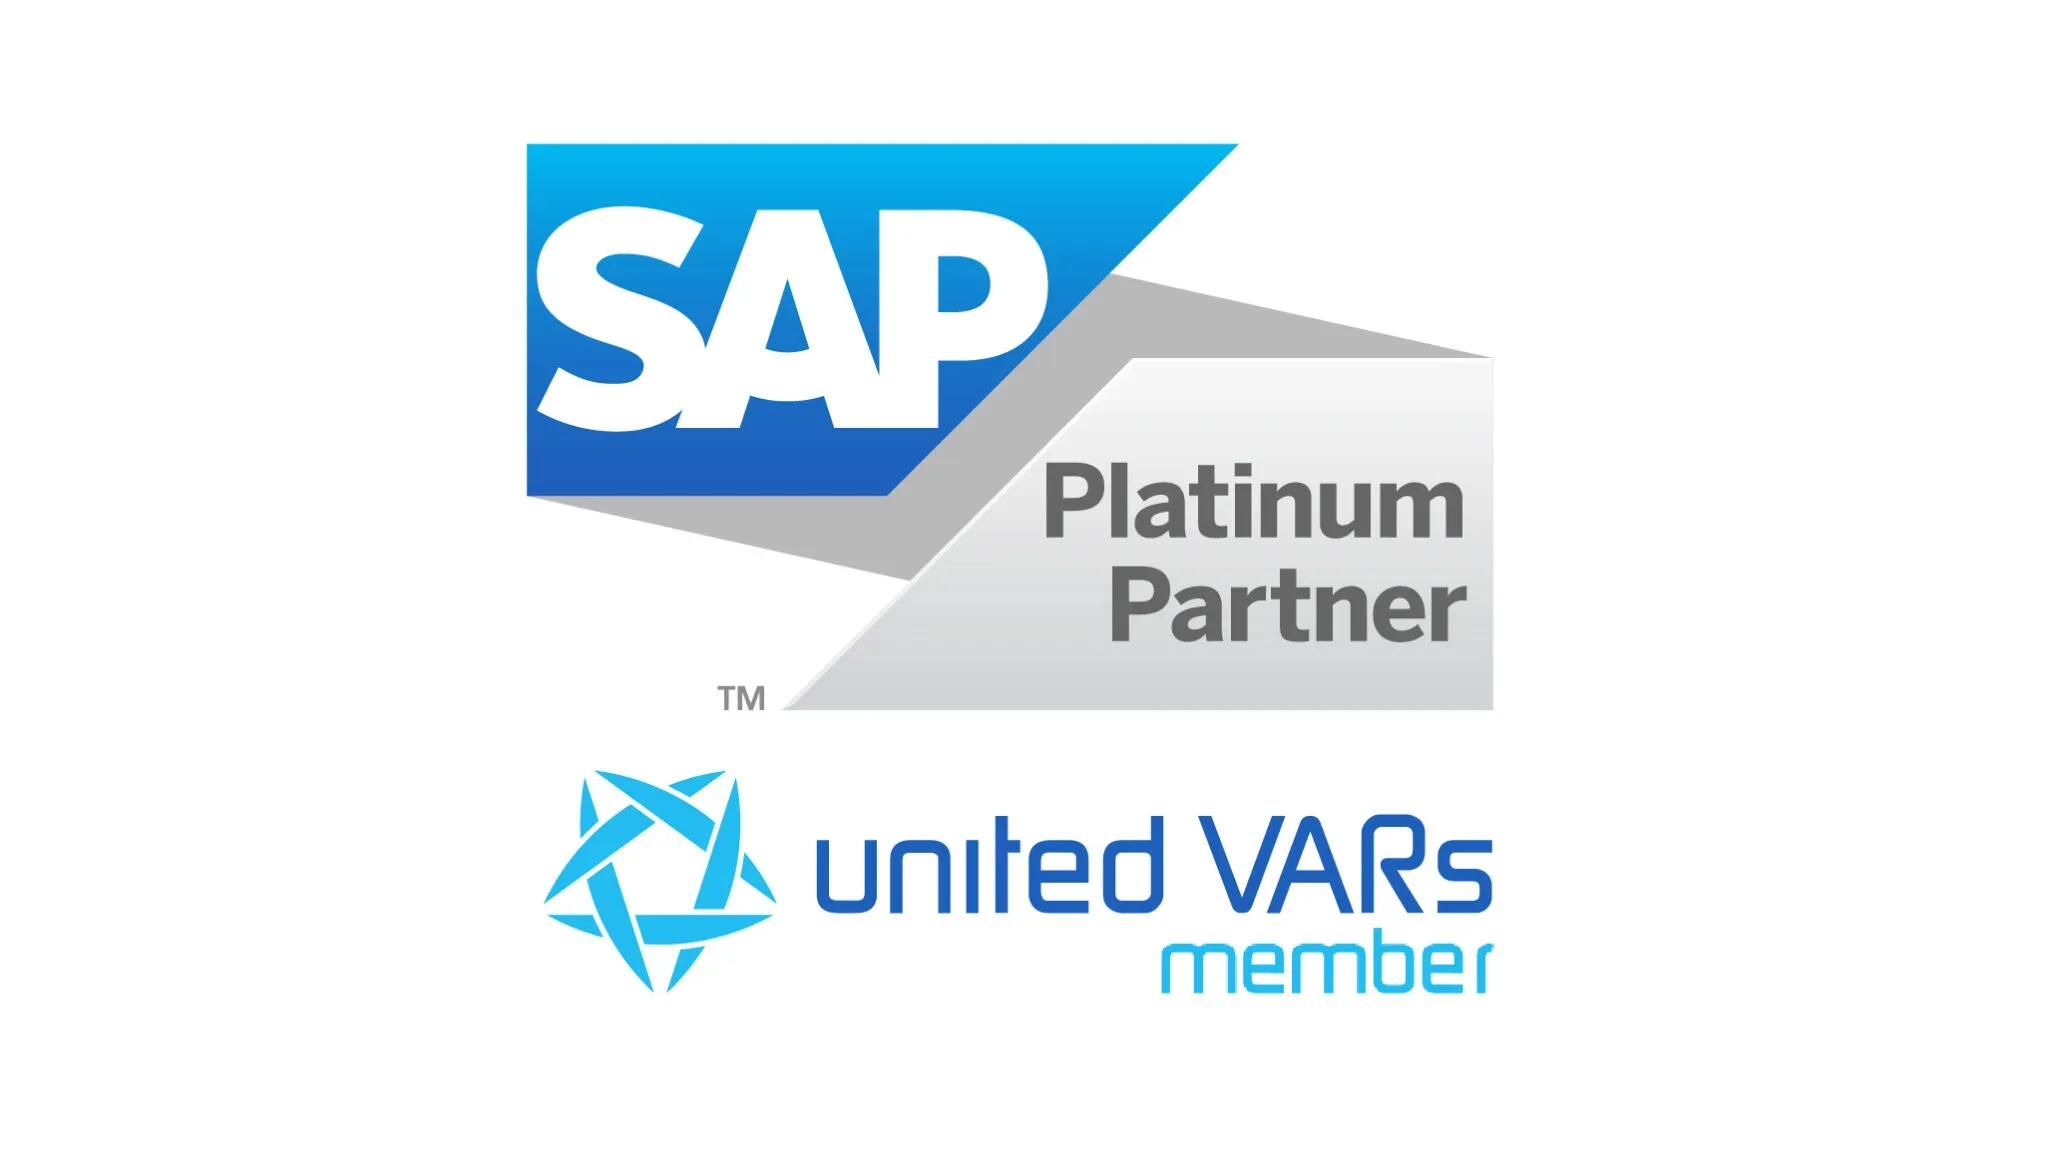 Platinum Partner and United VARs member logo